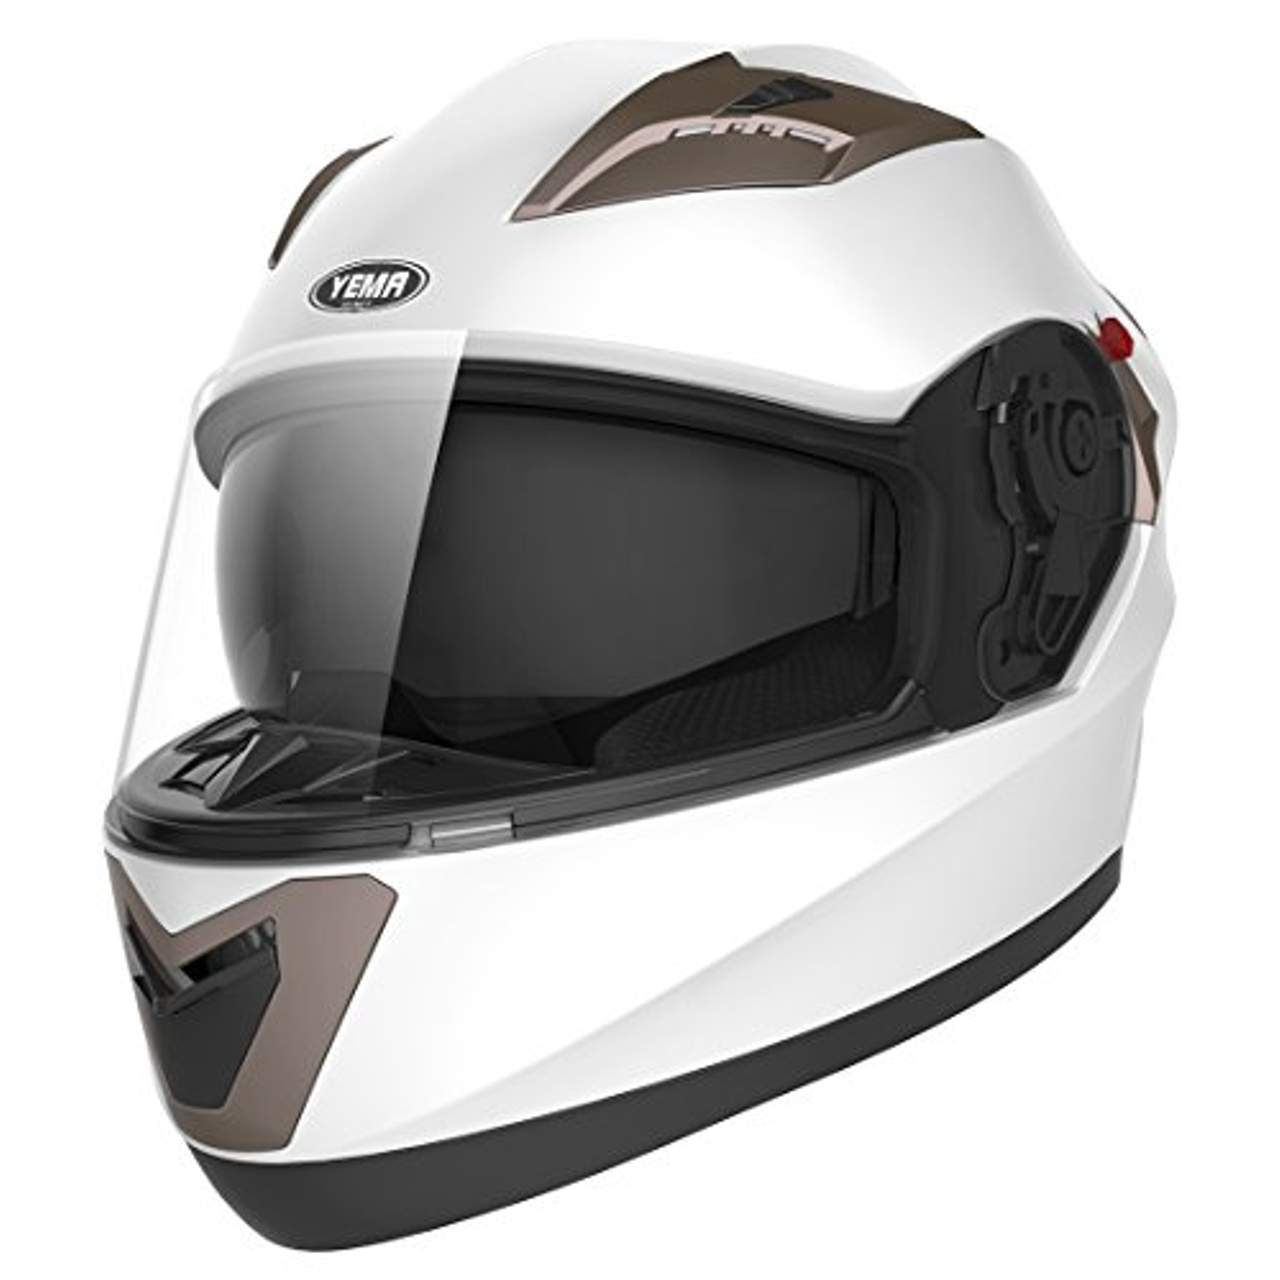 Motorradhelm Integralhelm Rollerhelm Fullface Helm